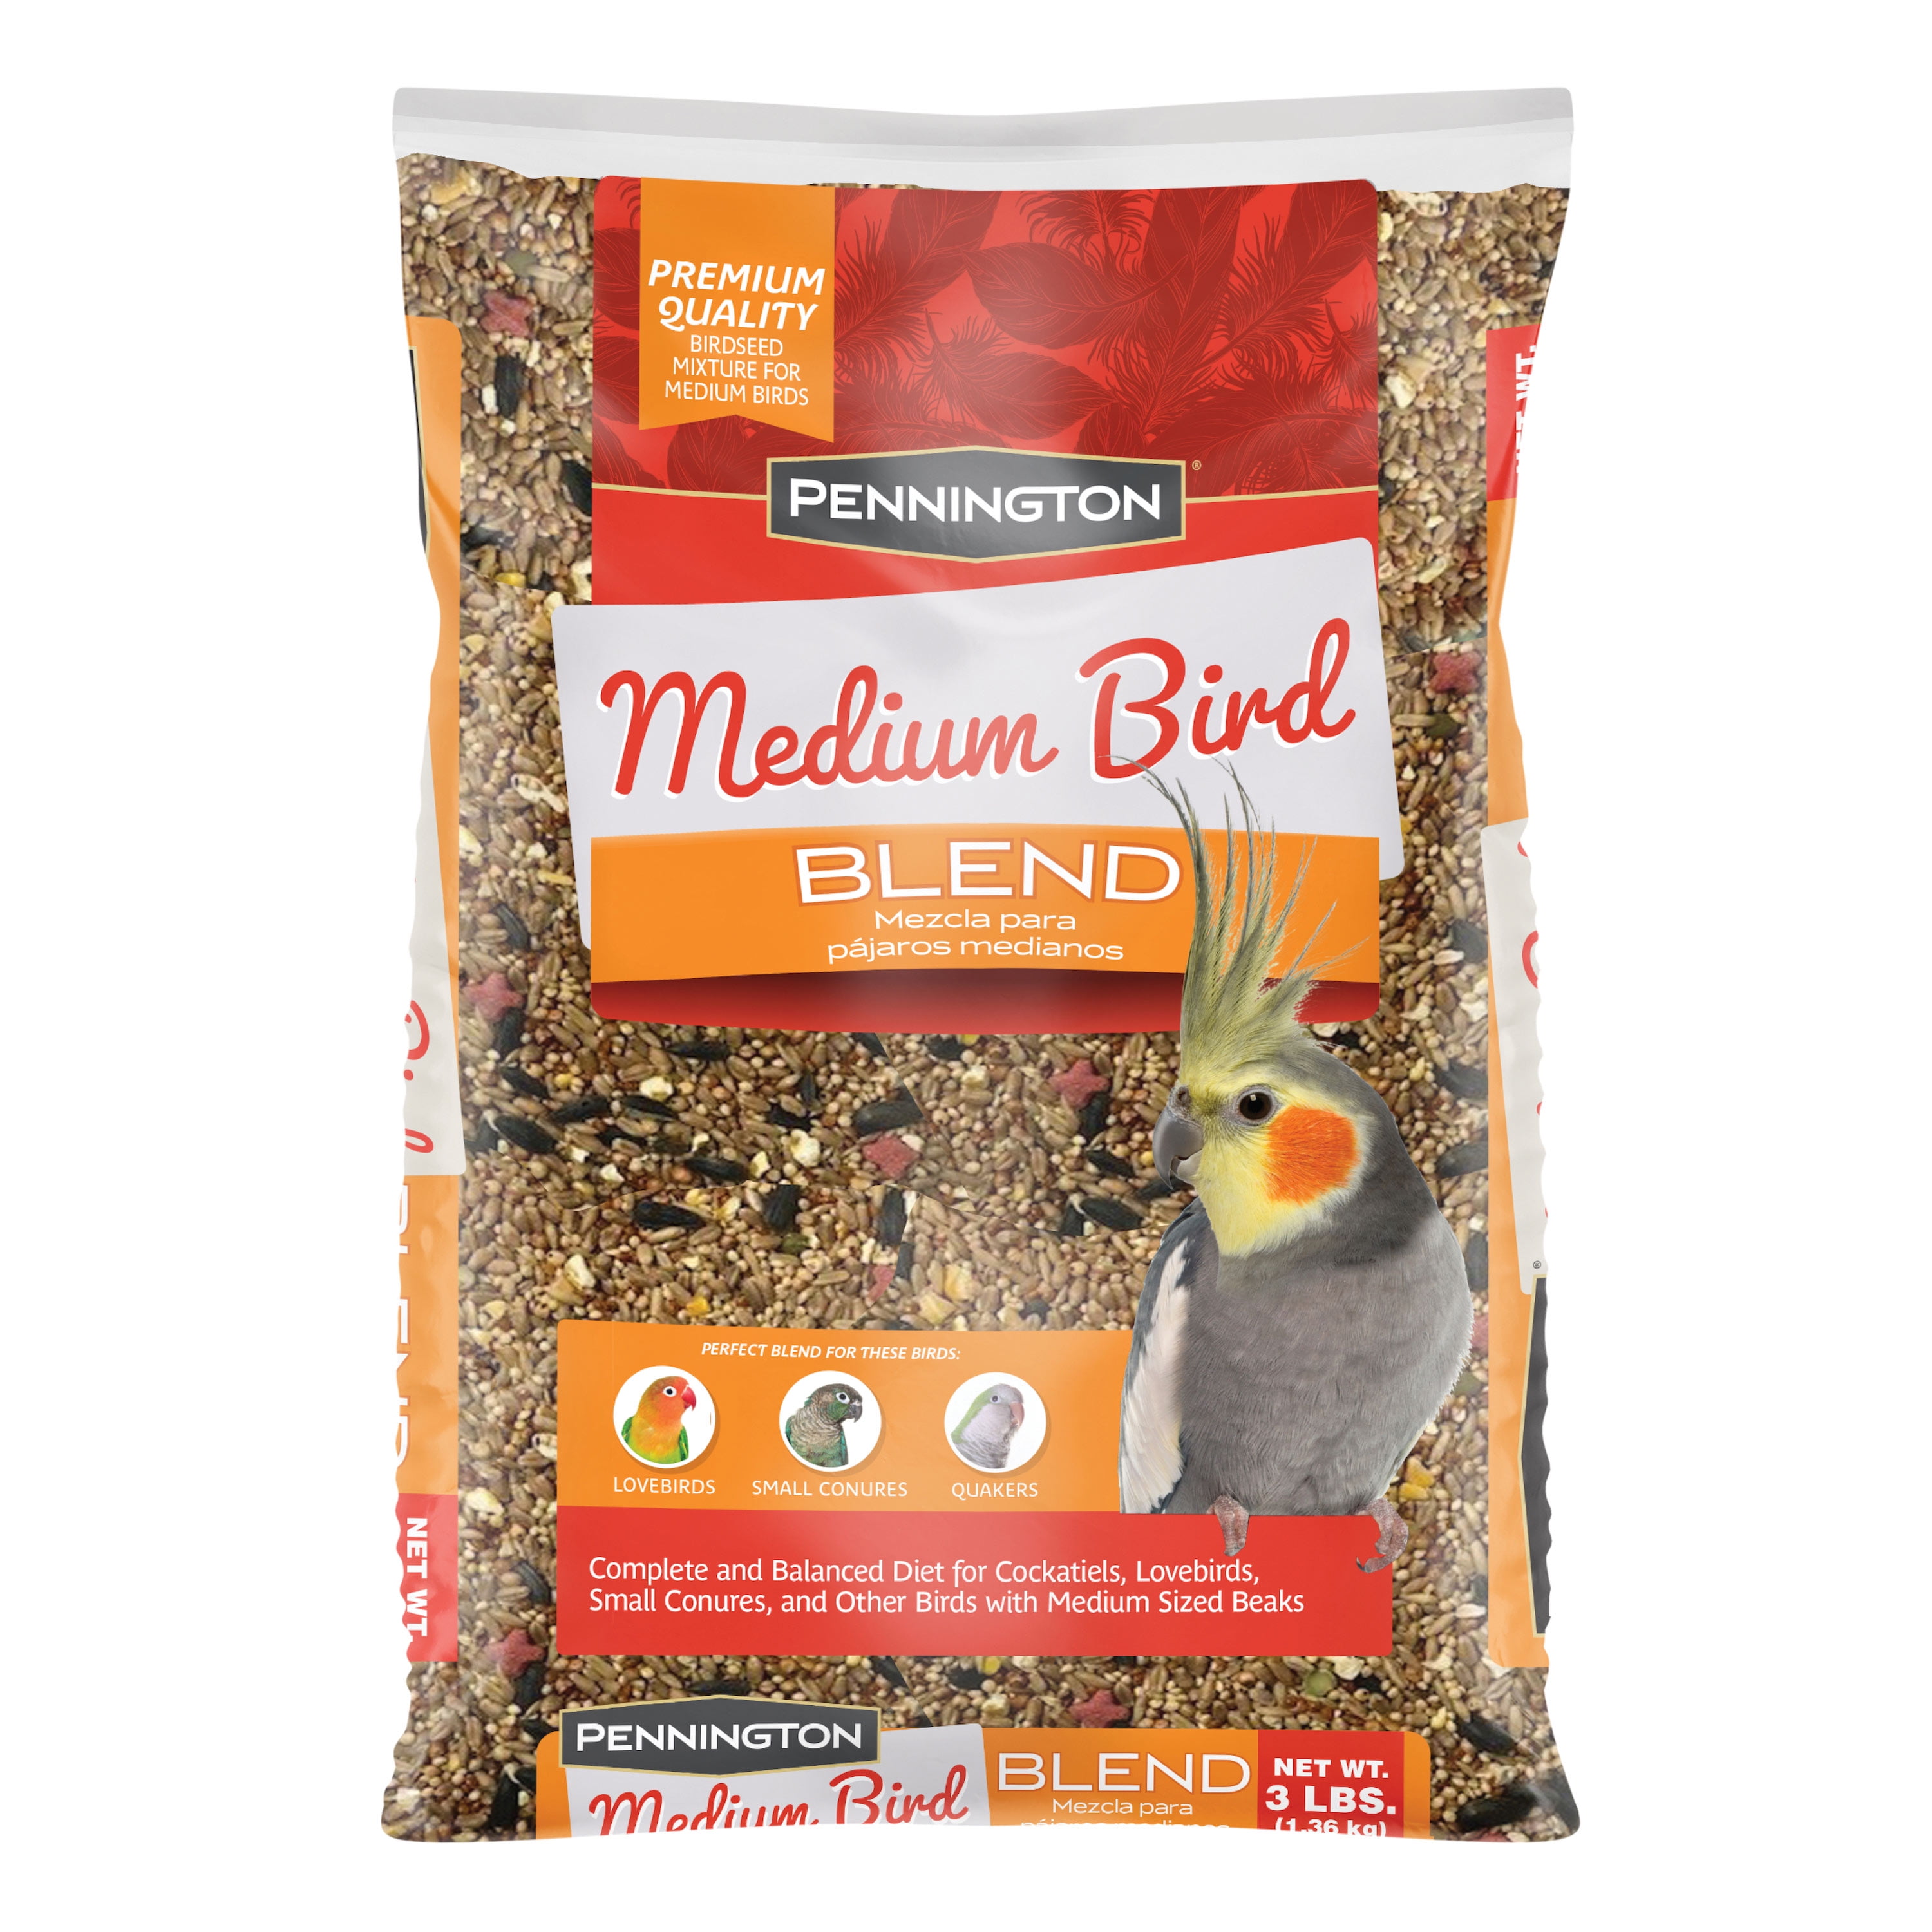 Pennington Medium Bird Blend Bird Food for Cockatiels, Love Birds; 3 lb Bag